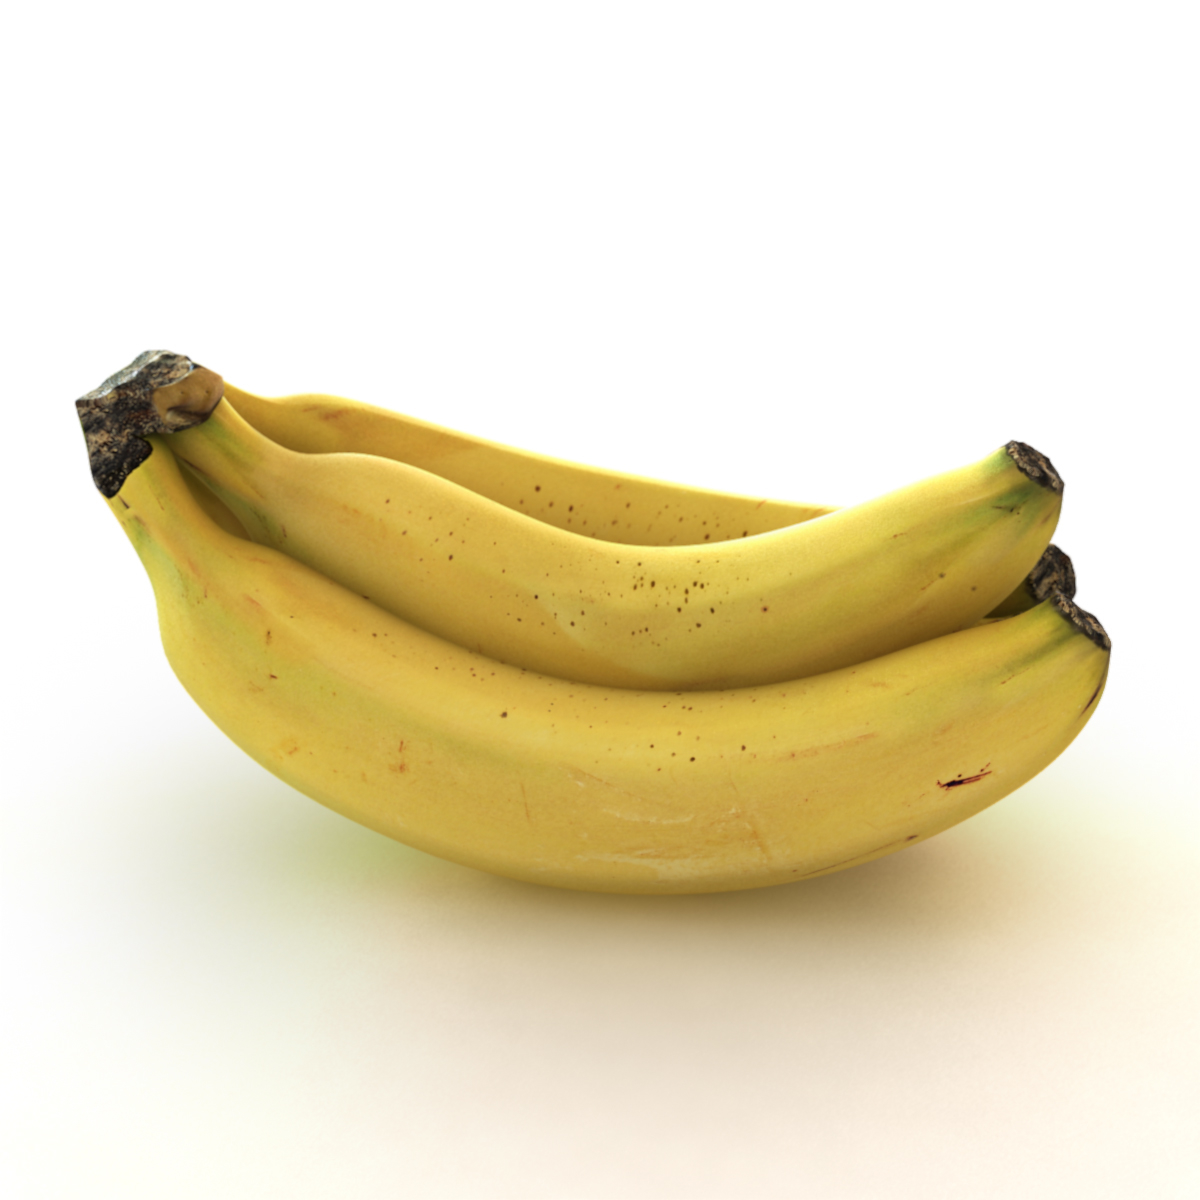 banana realistic 3d model